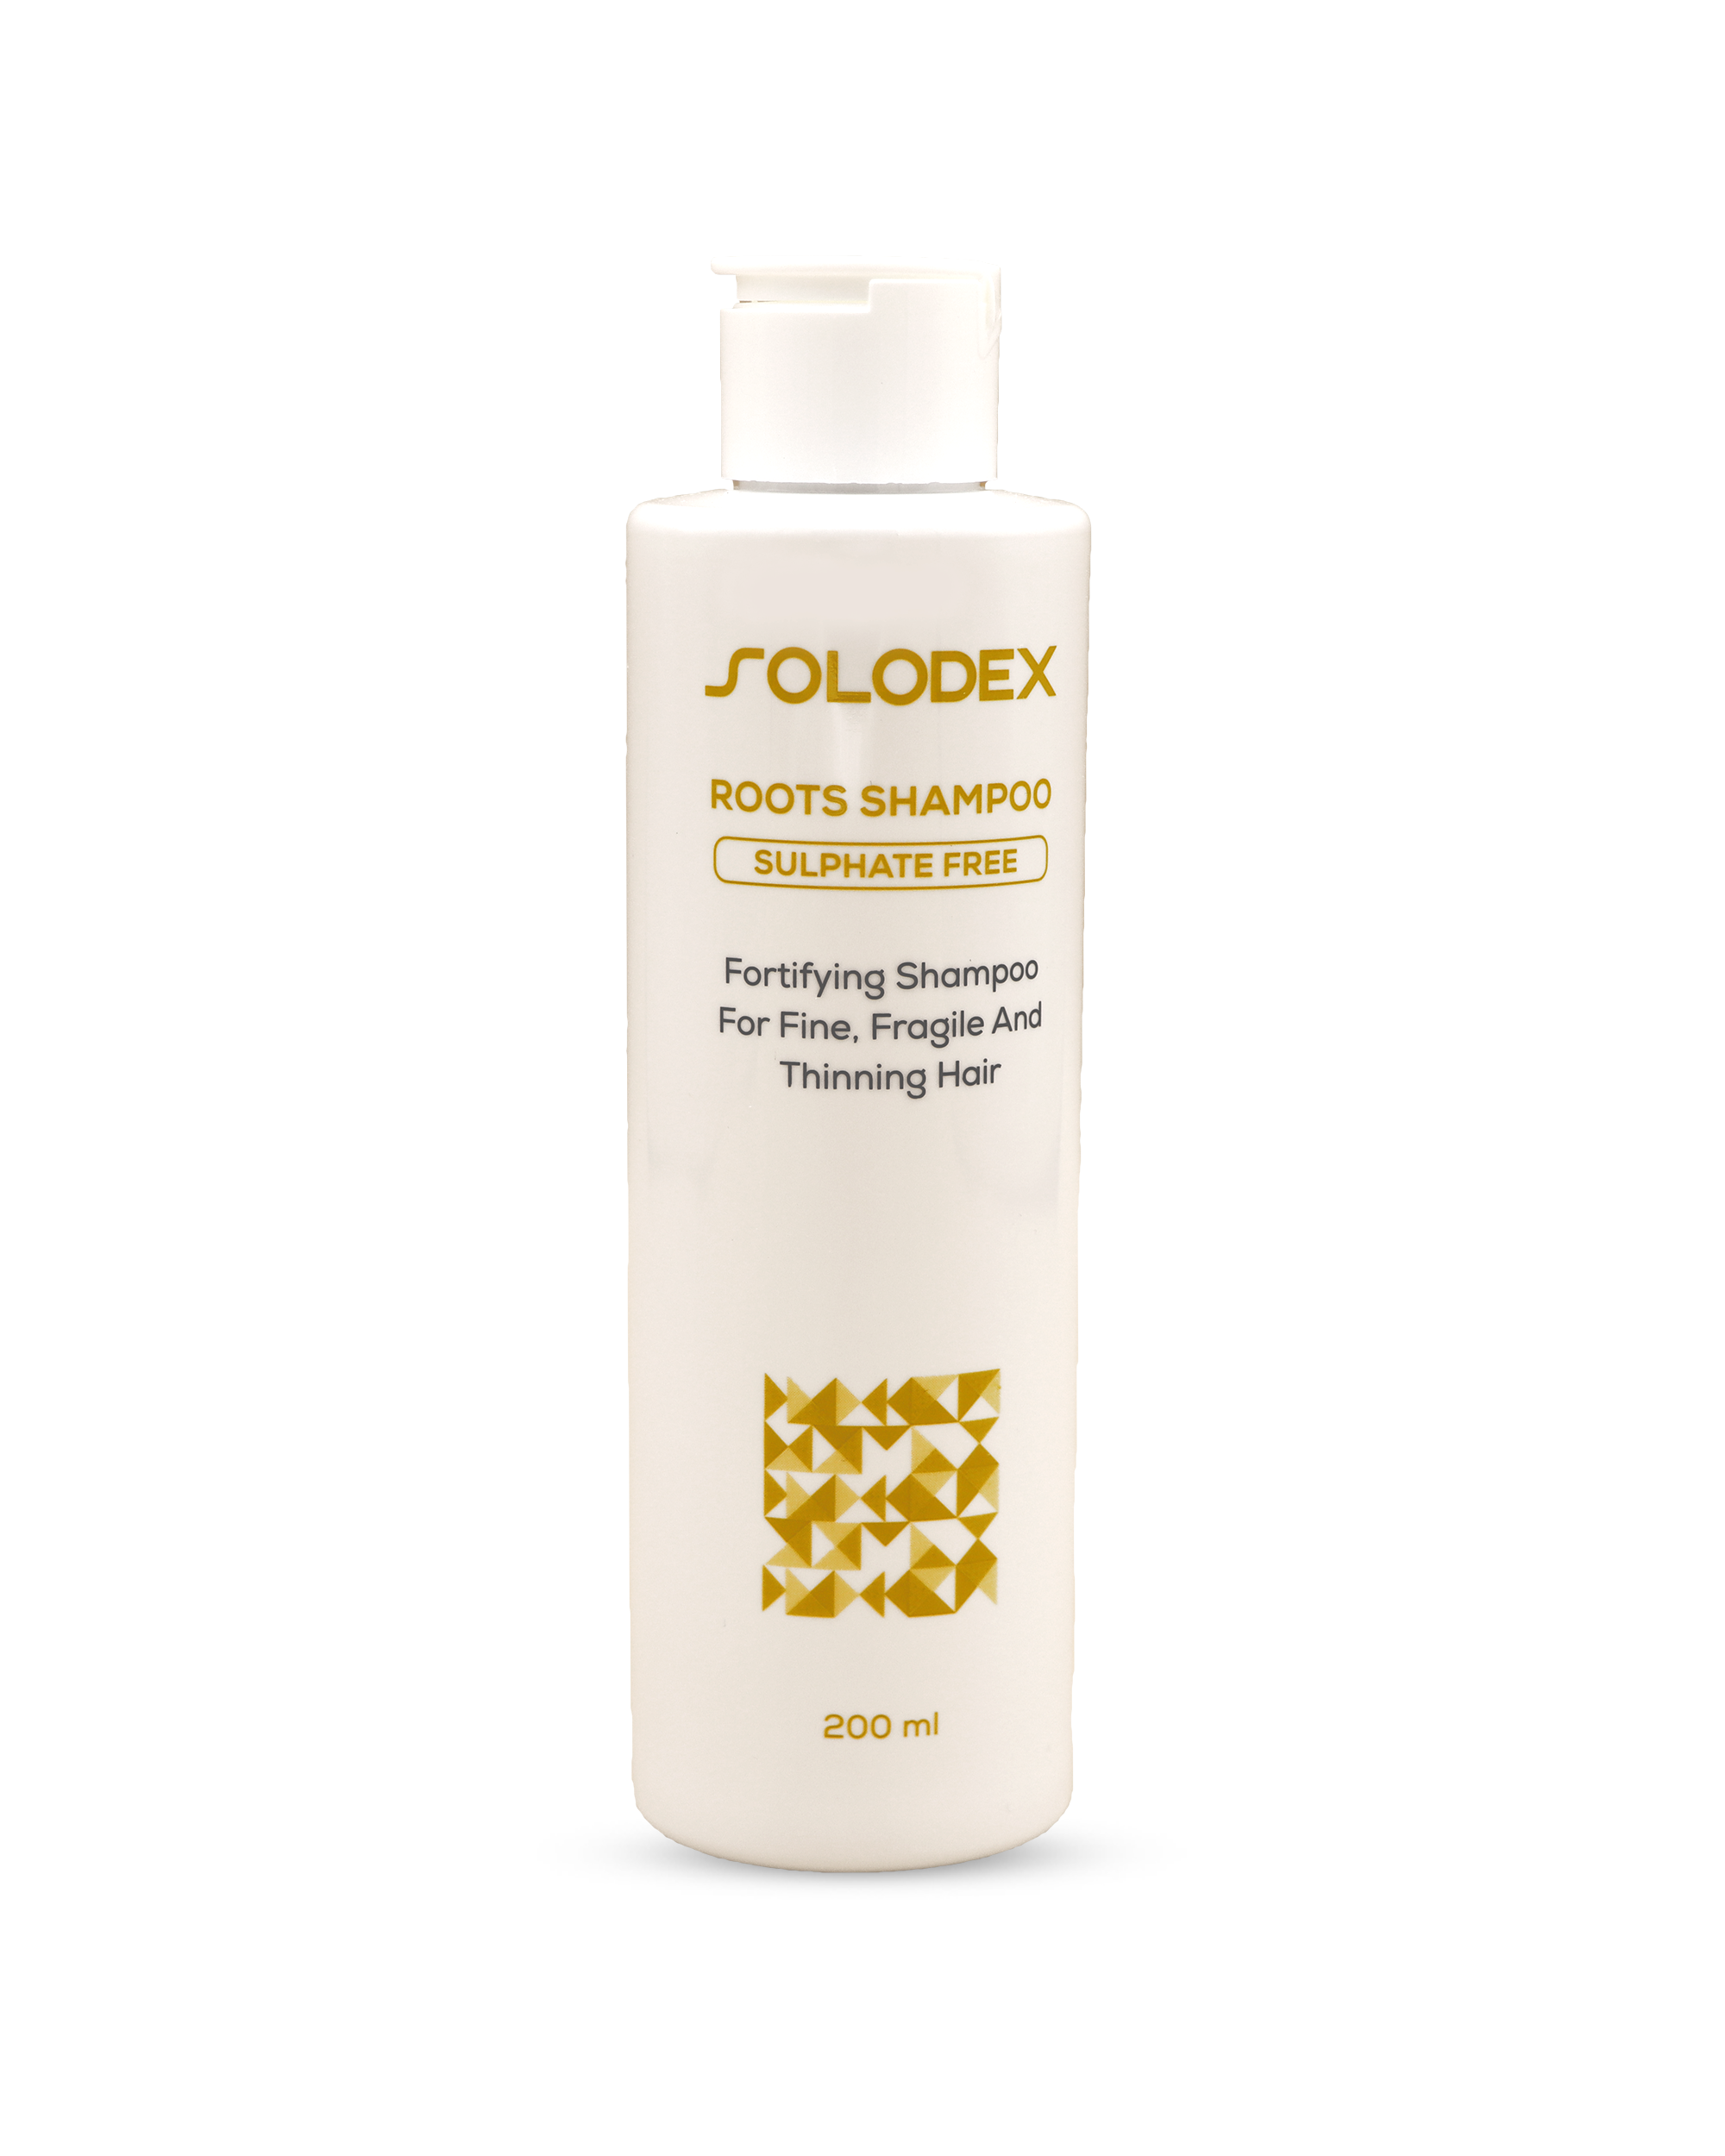 Solodex Roots Shampoo